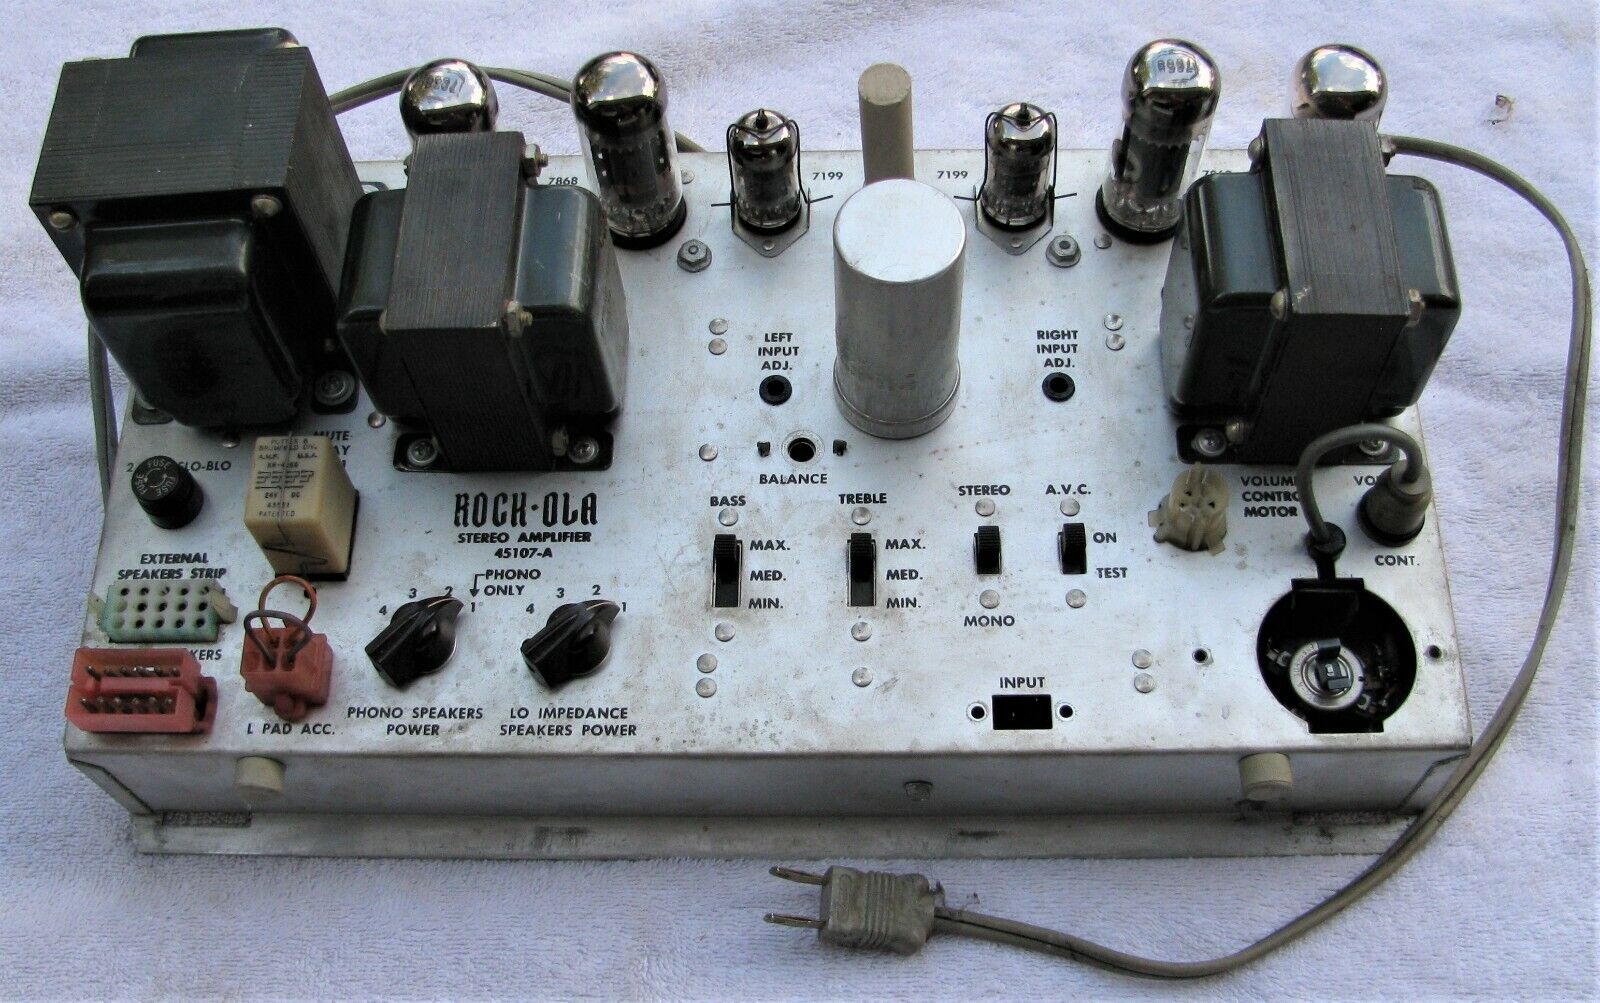 ROCK-OLA Stereo Tube Amplifier 45107-A  441 model jukebox untested 